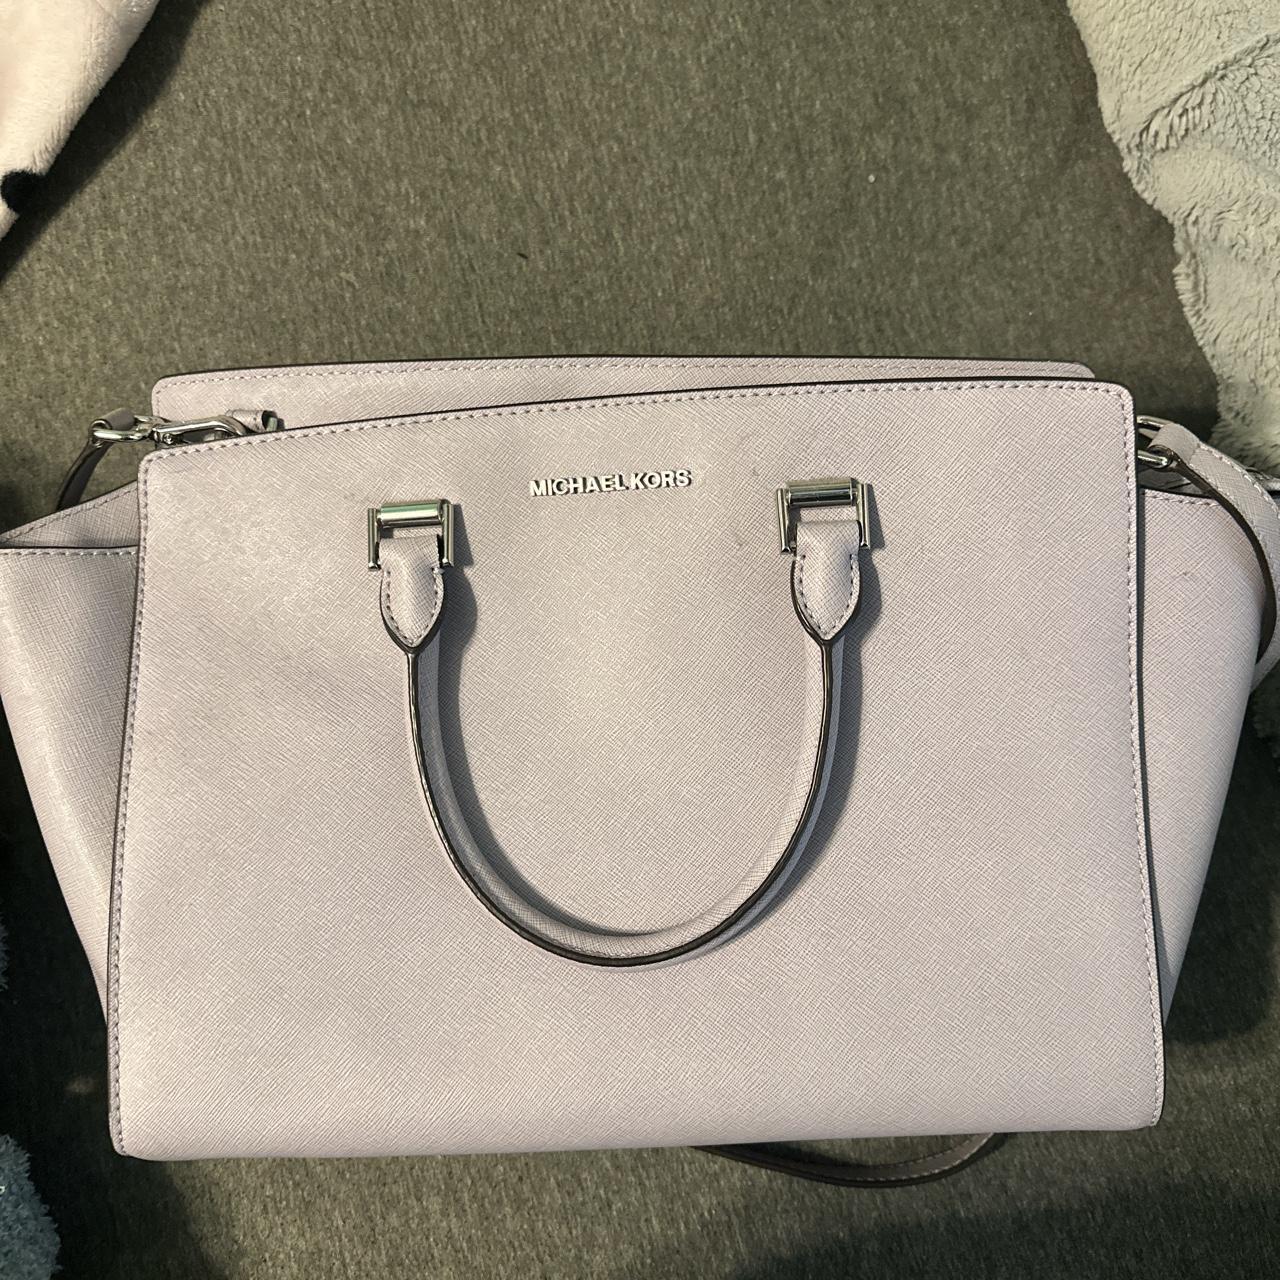 Michael Kors Purple Clutch Bags & Handbags for Women for sale | eBay